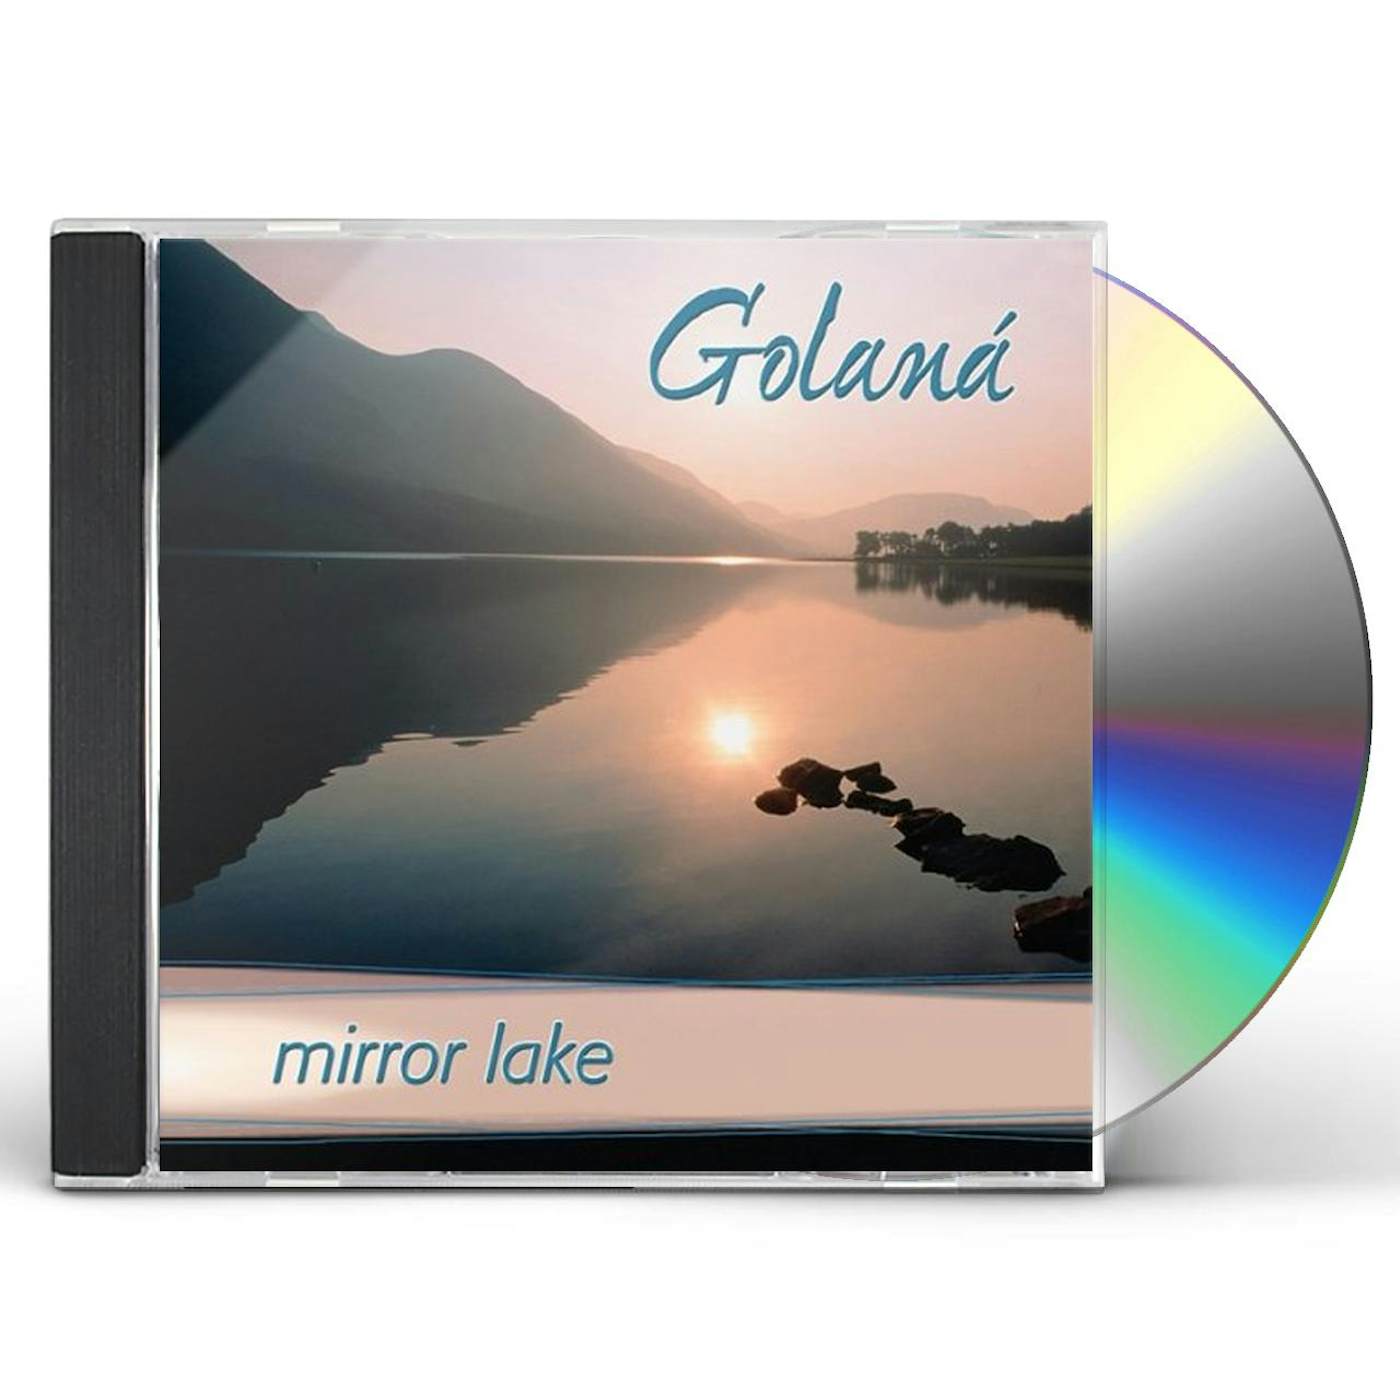 Golana MIRROR LAKE CD